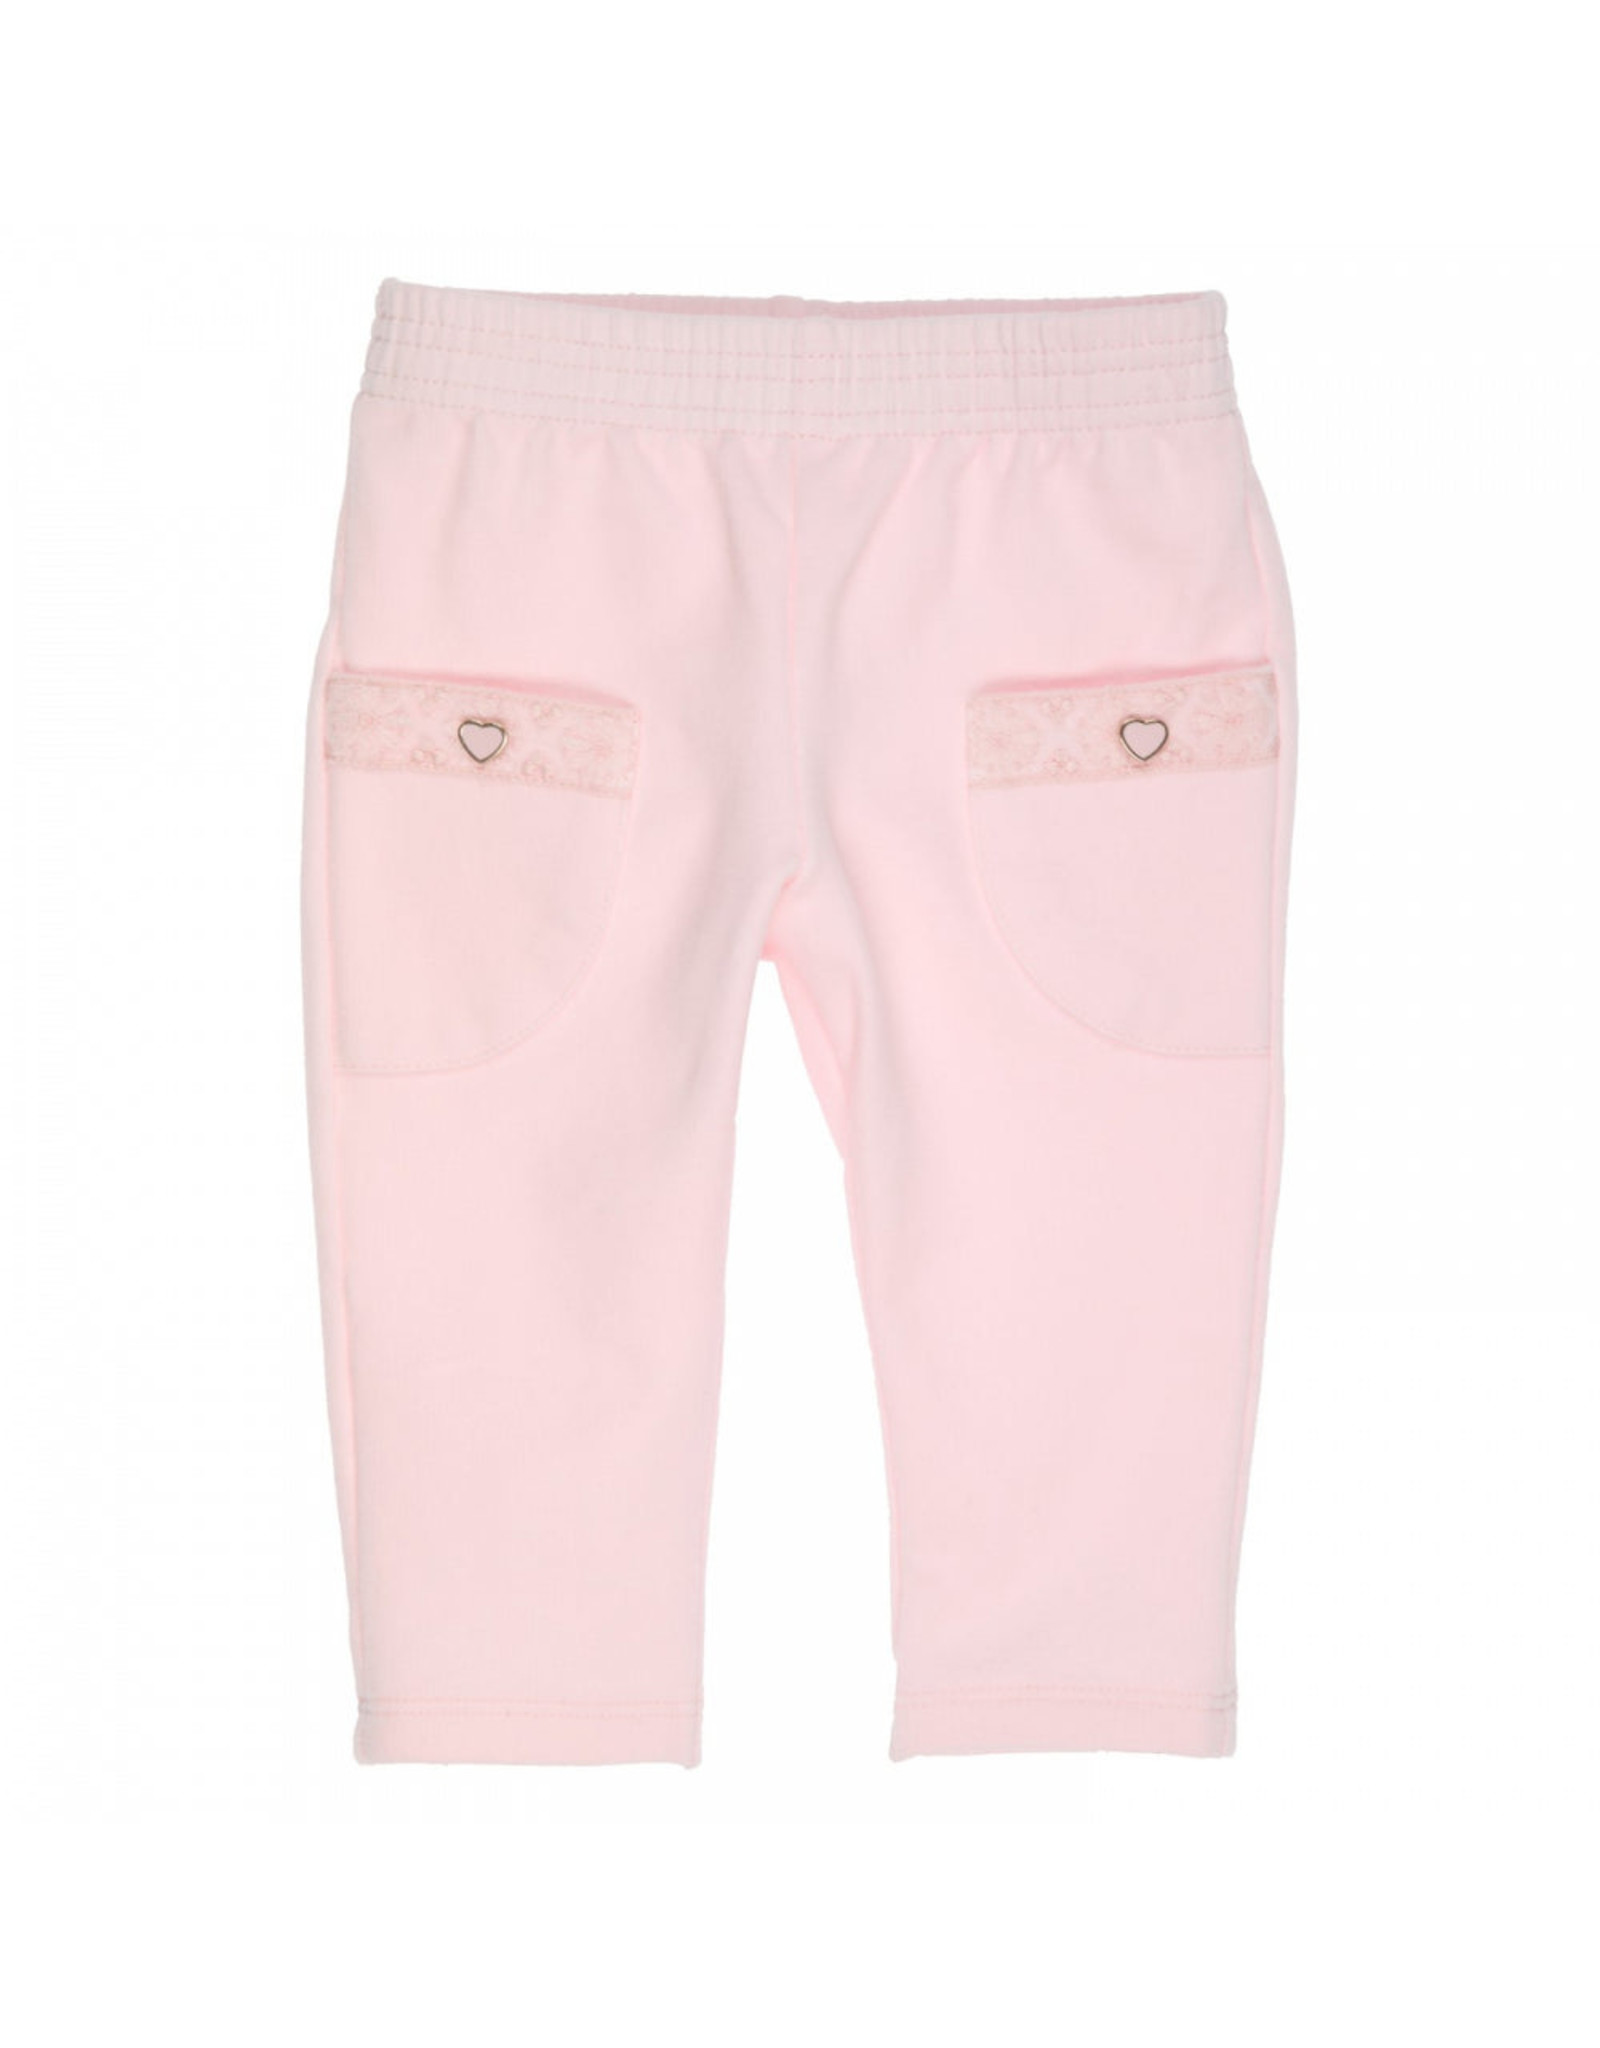 Gymp Pantalon - Pockets With Lace - Vieux-Rose